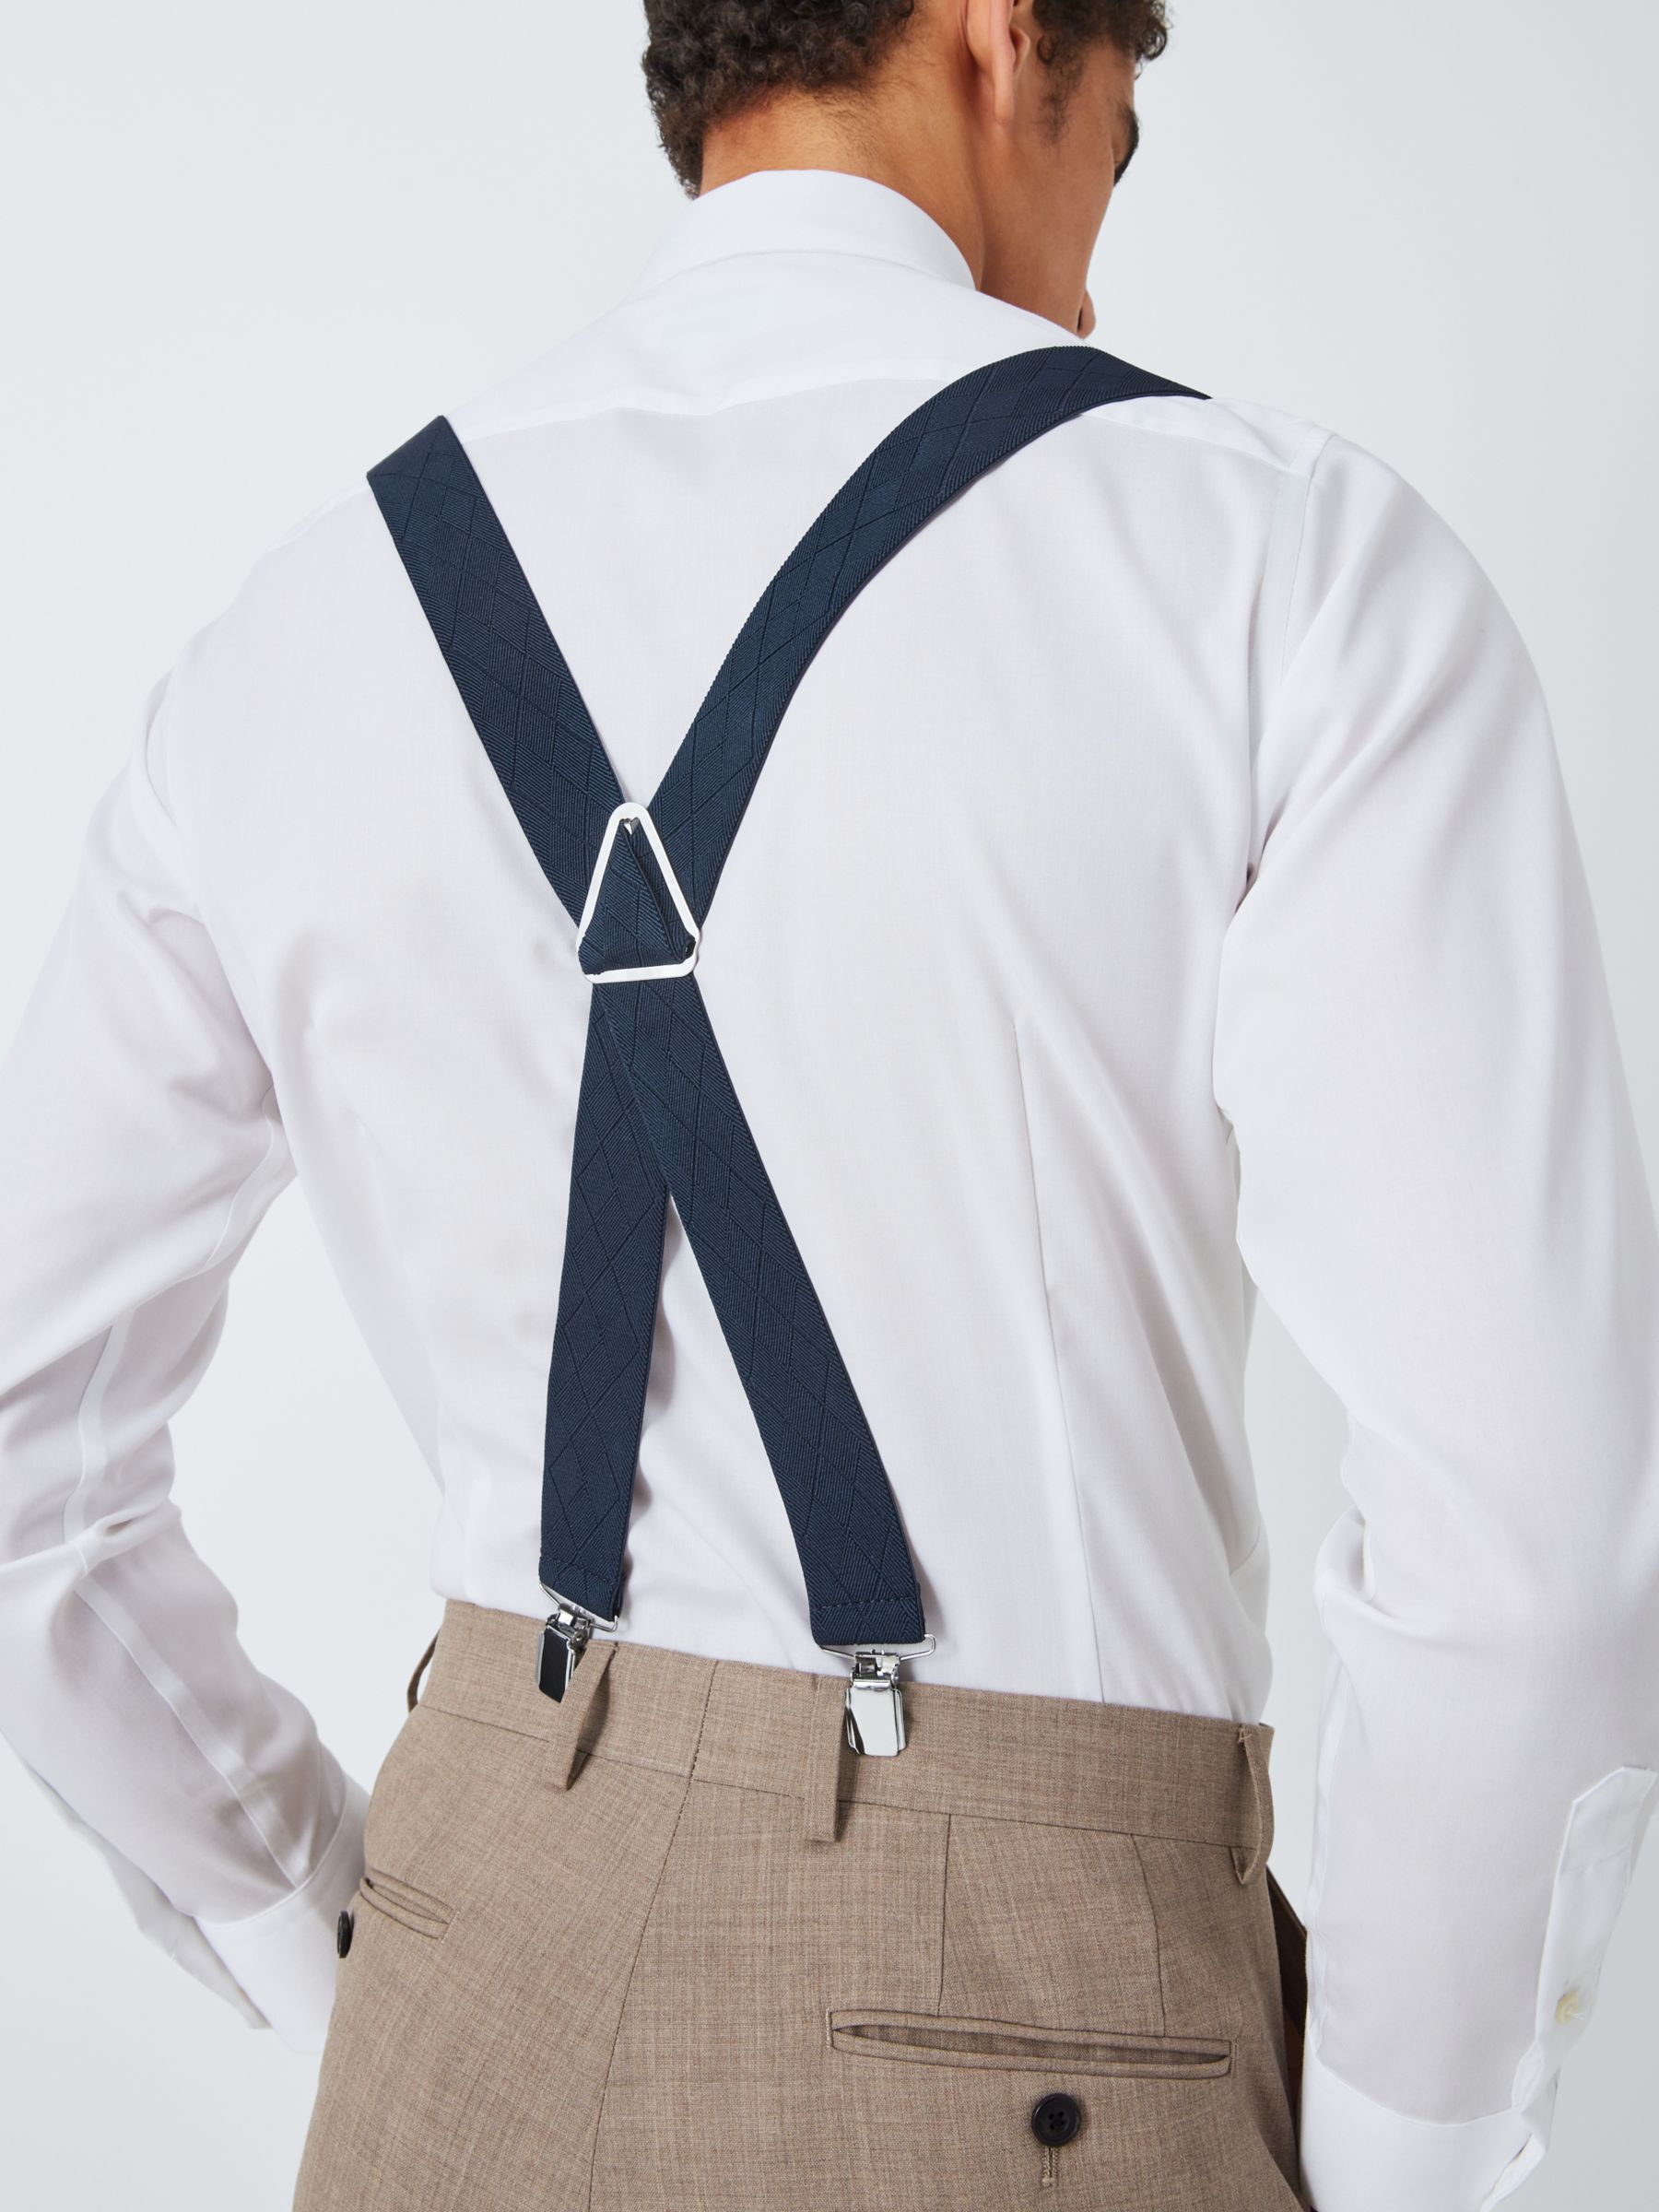 Mens Dress Suspenders, Woven Elastic Strap Suspenders in Navy